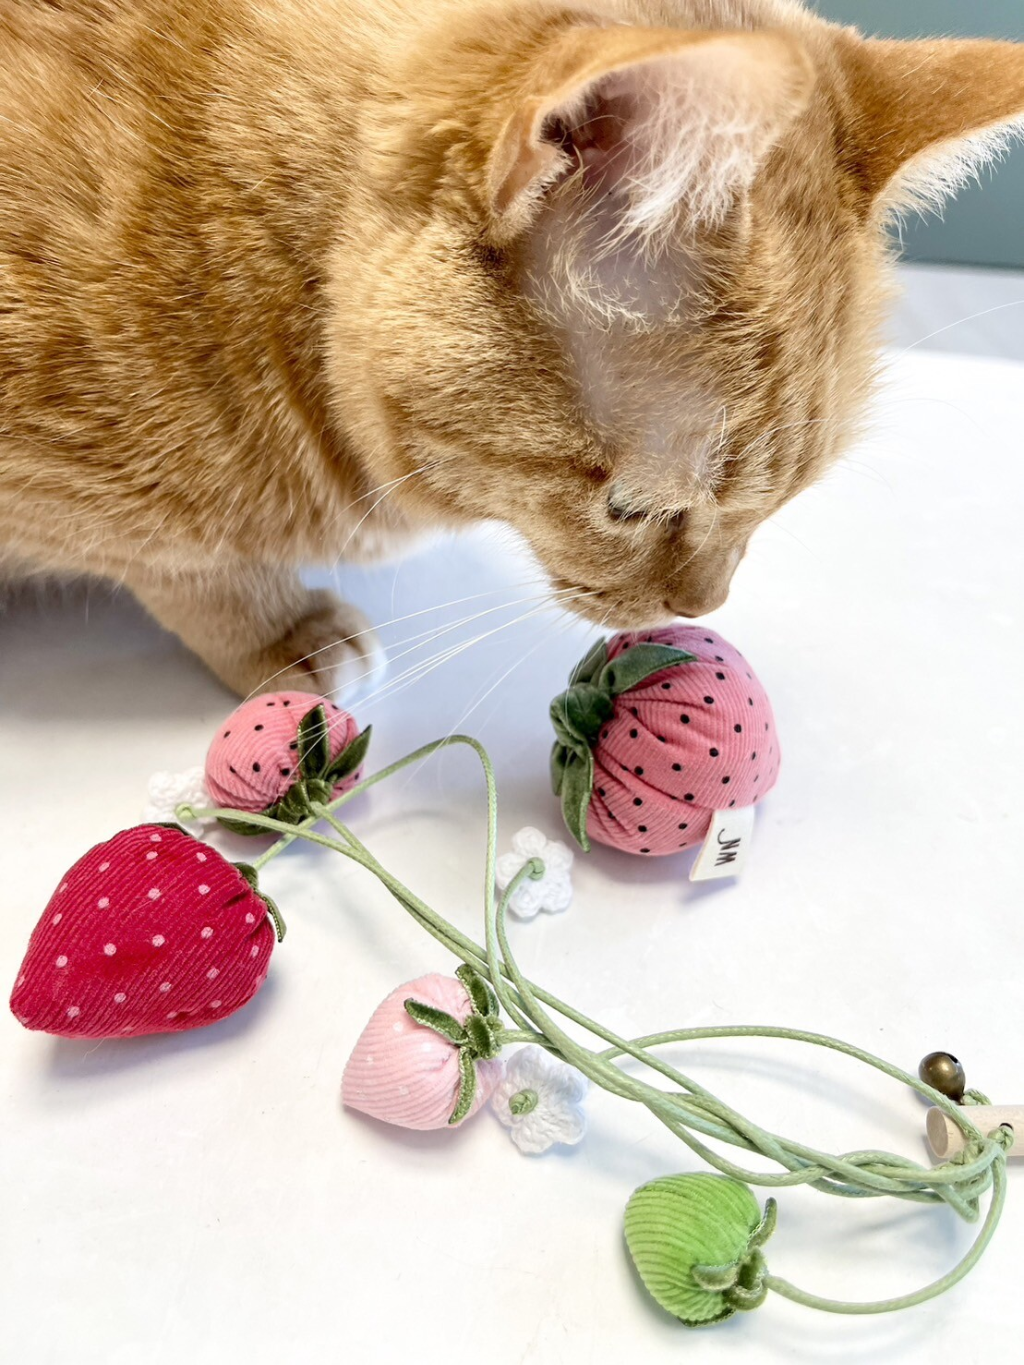 Wetnose | 草莓套裝 貓薄荷玩具